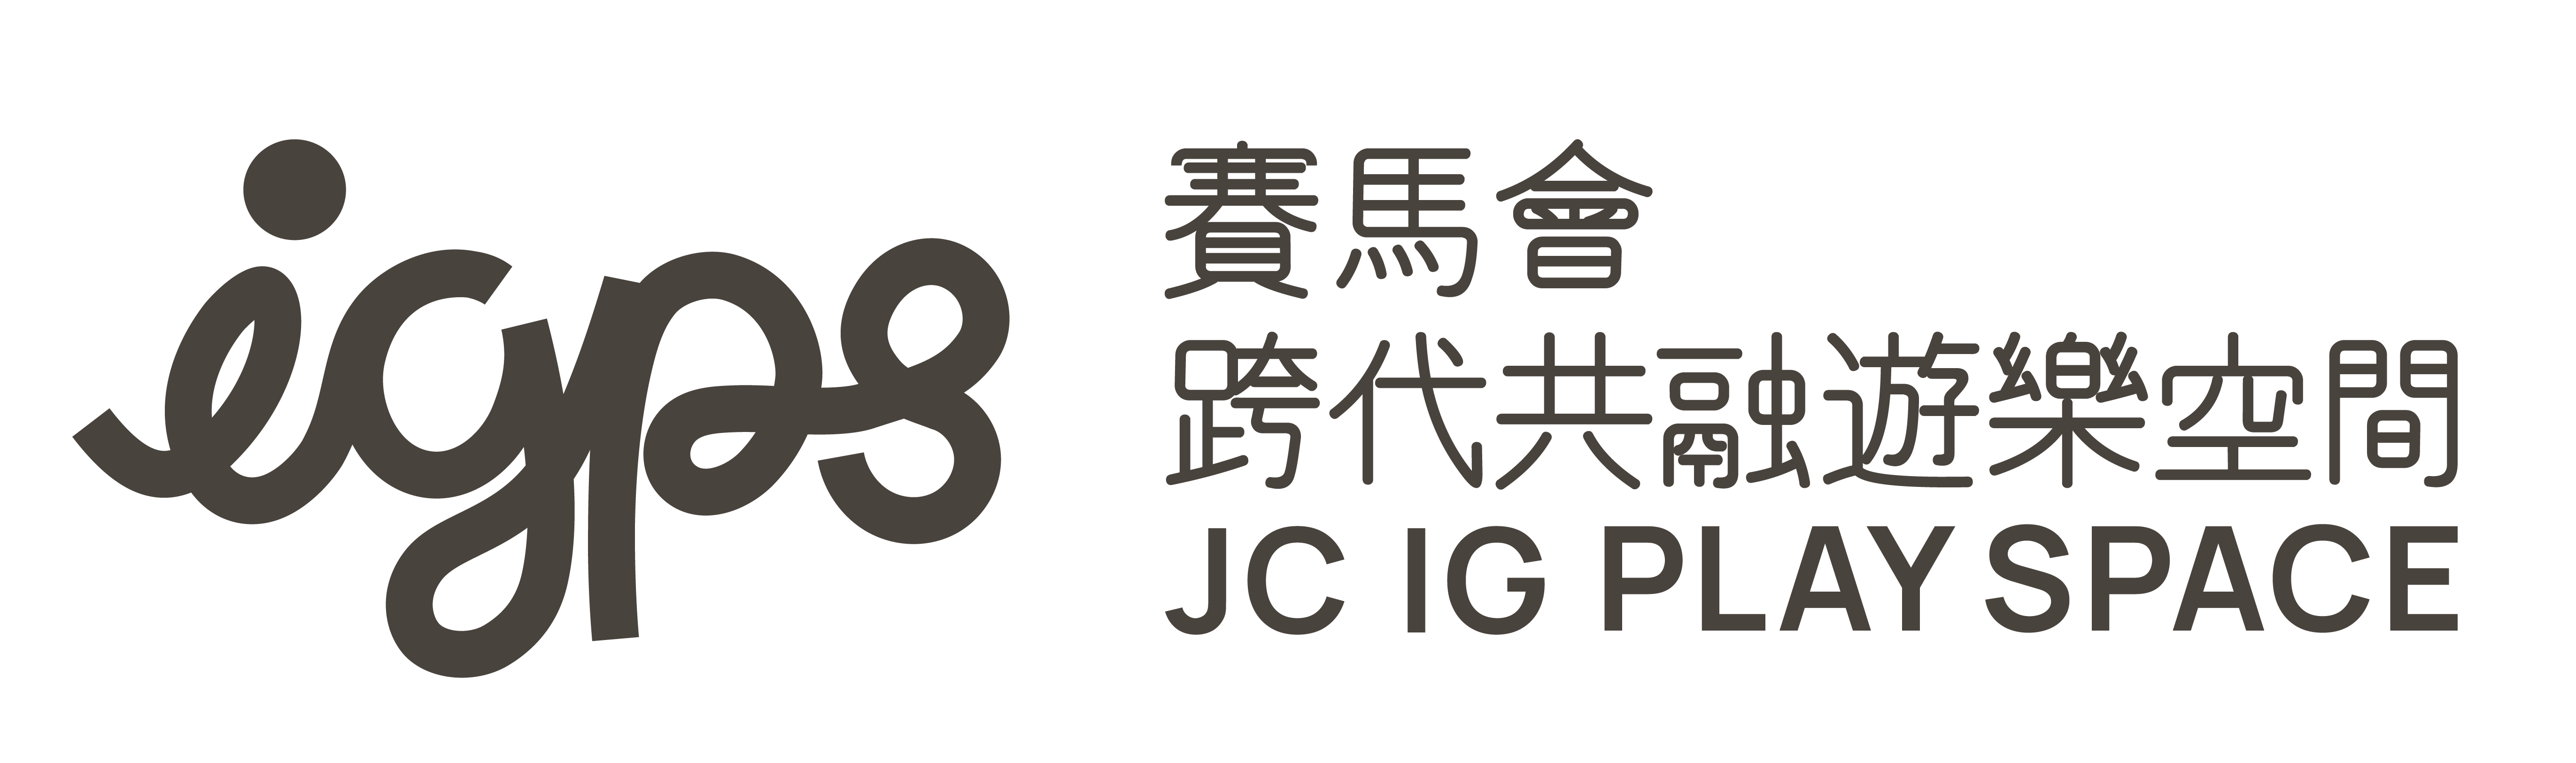 Logo - JC IGPS